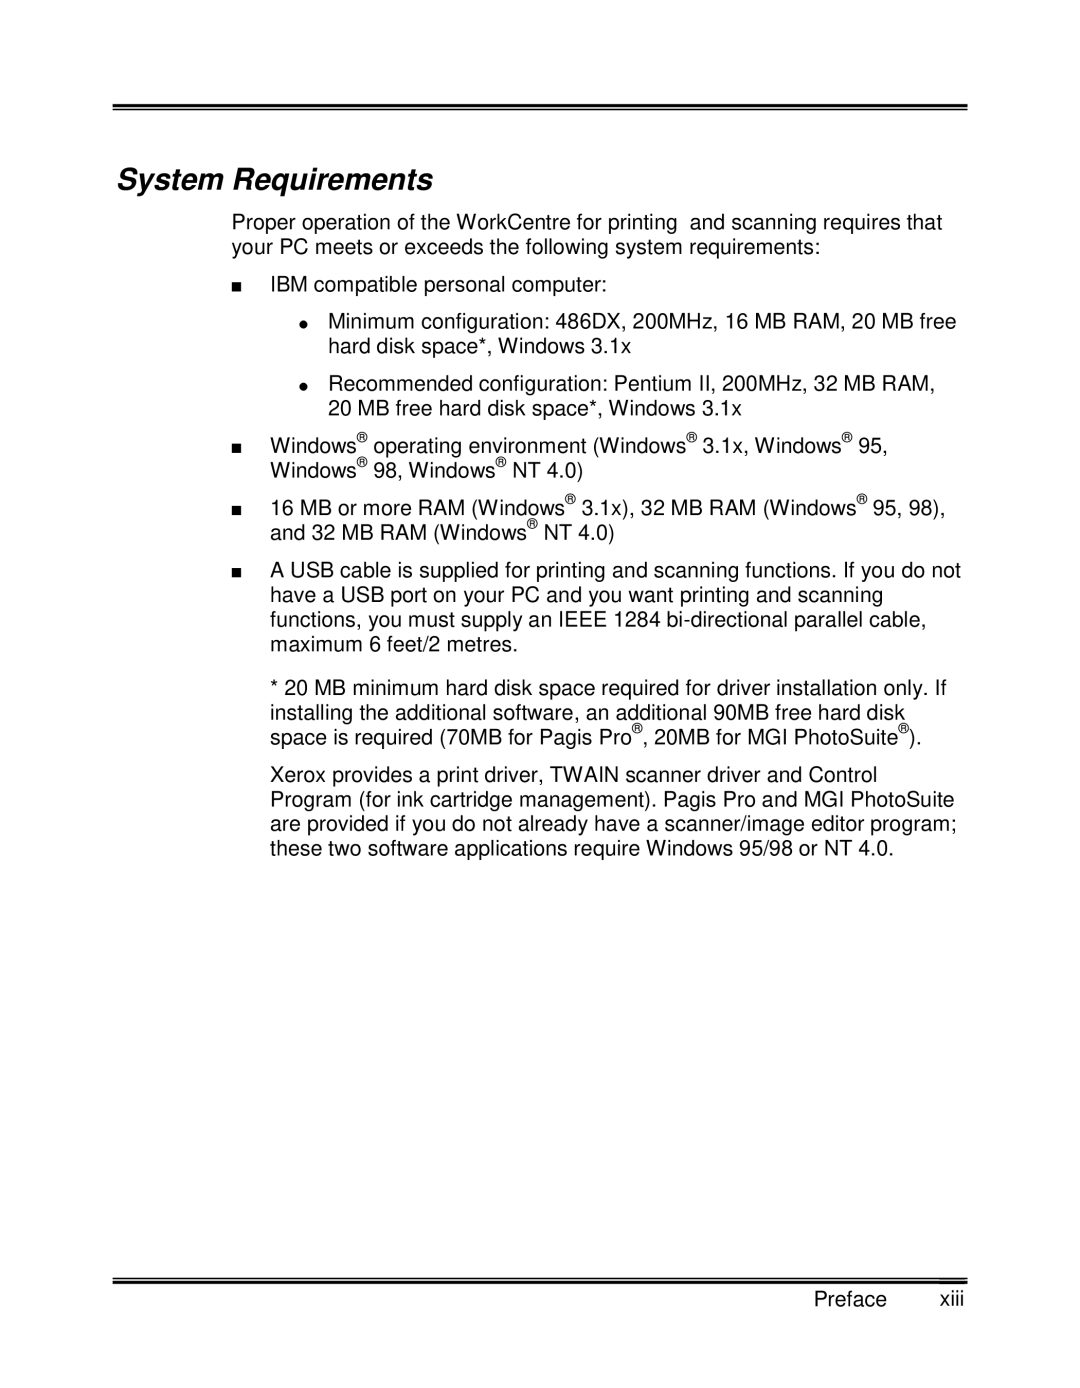 Xerox XK25C, XK35C manual System Requirements 